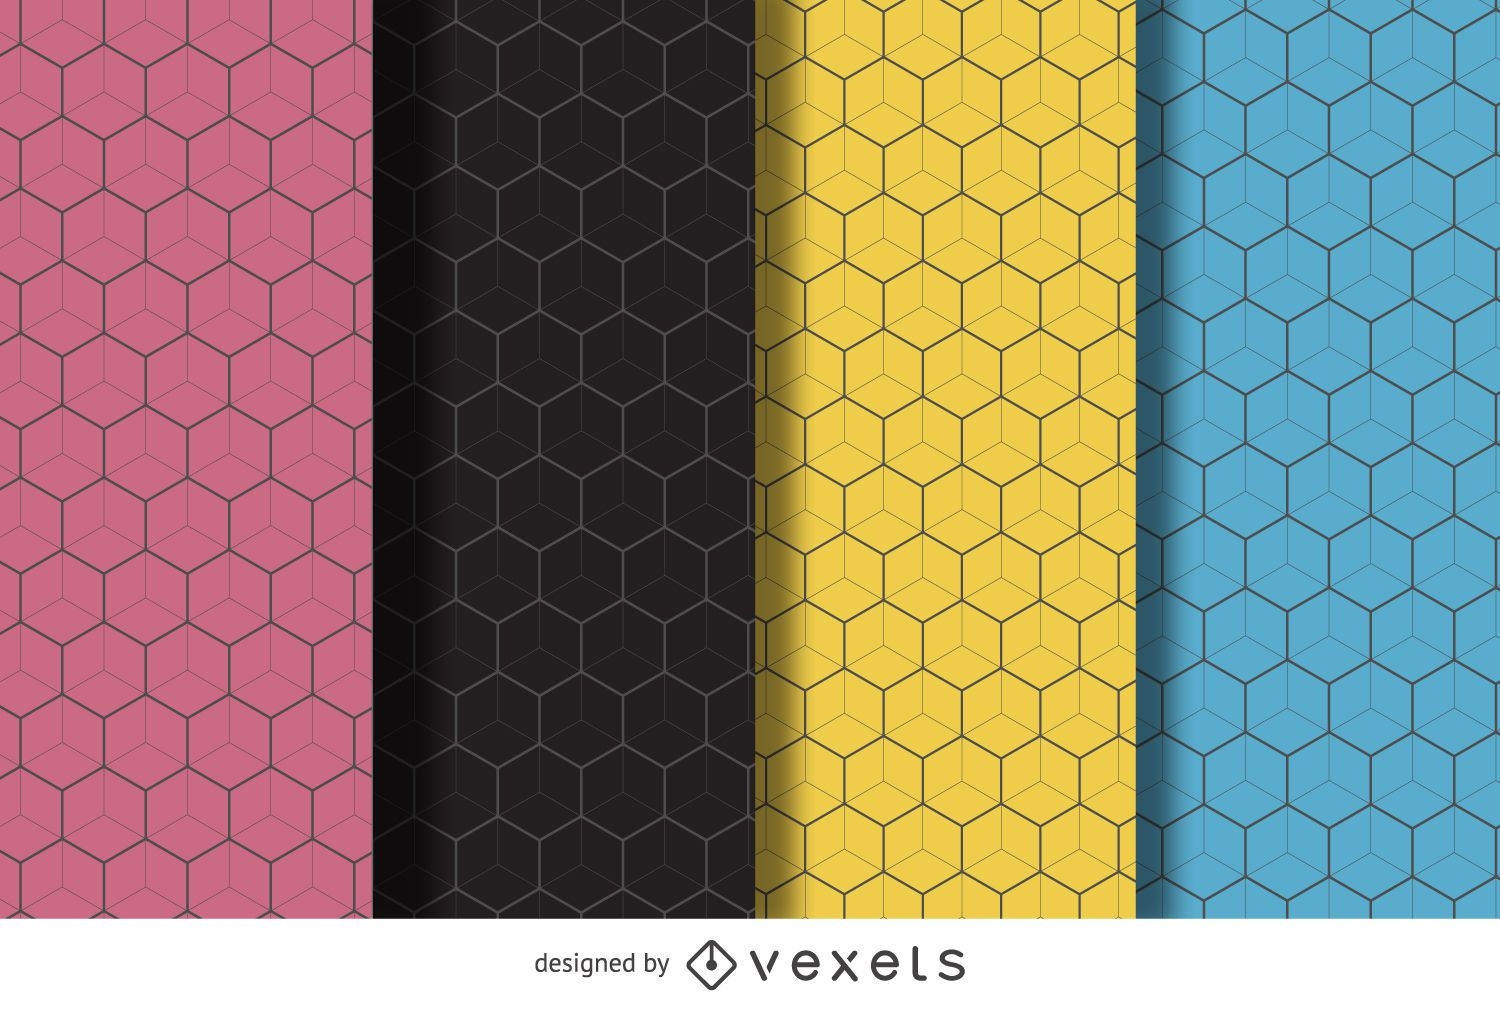 hexagon pattern wallpaper yellow